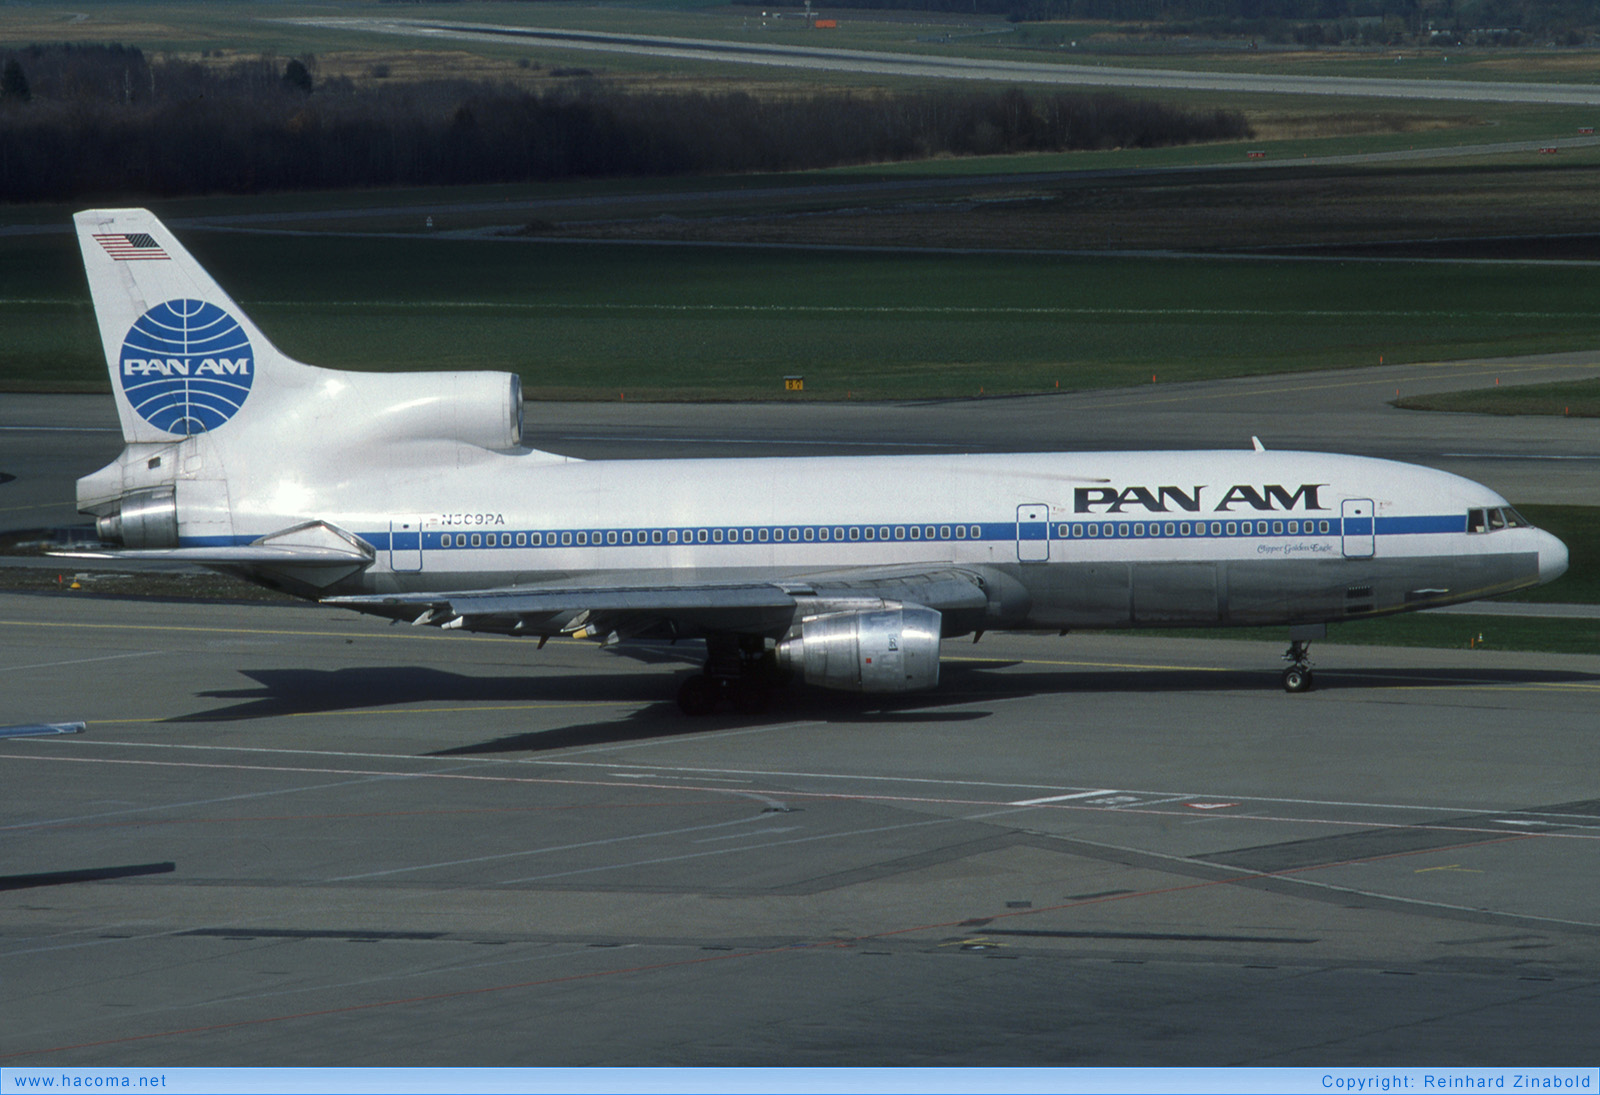 Photo of N509PA - Pan Am Clipper Golden Eagle - Zurich International Airport - Mar 1983